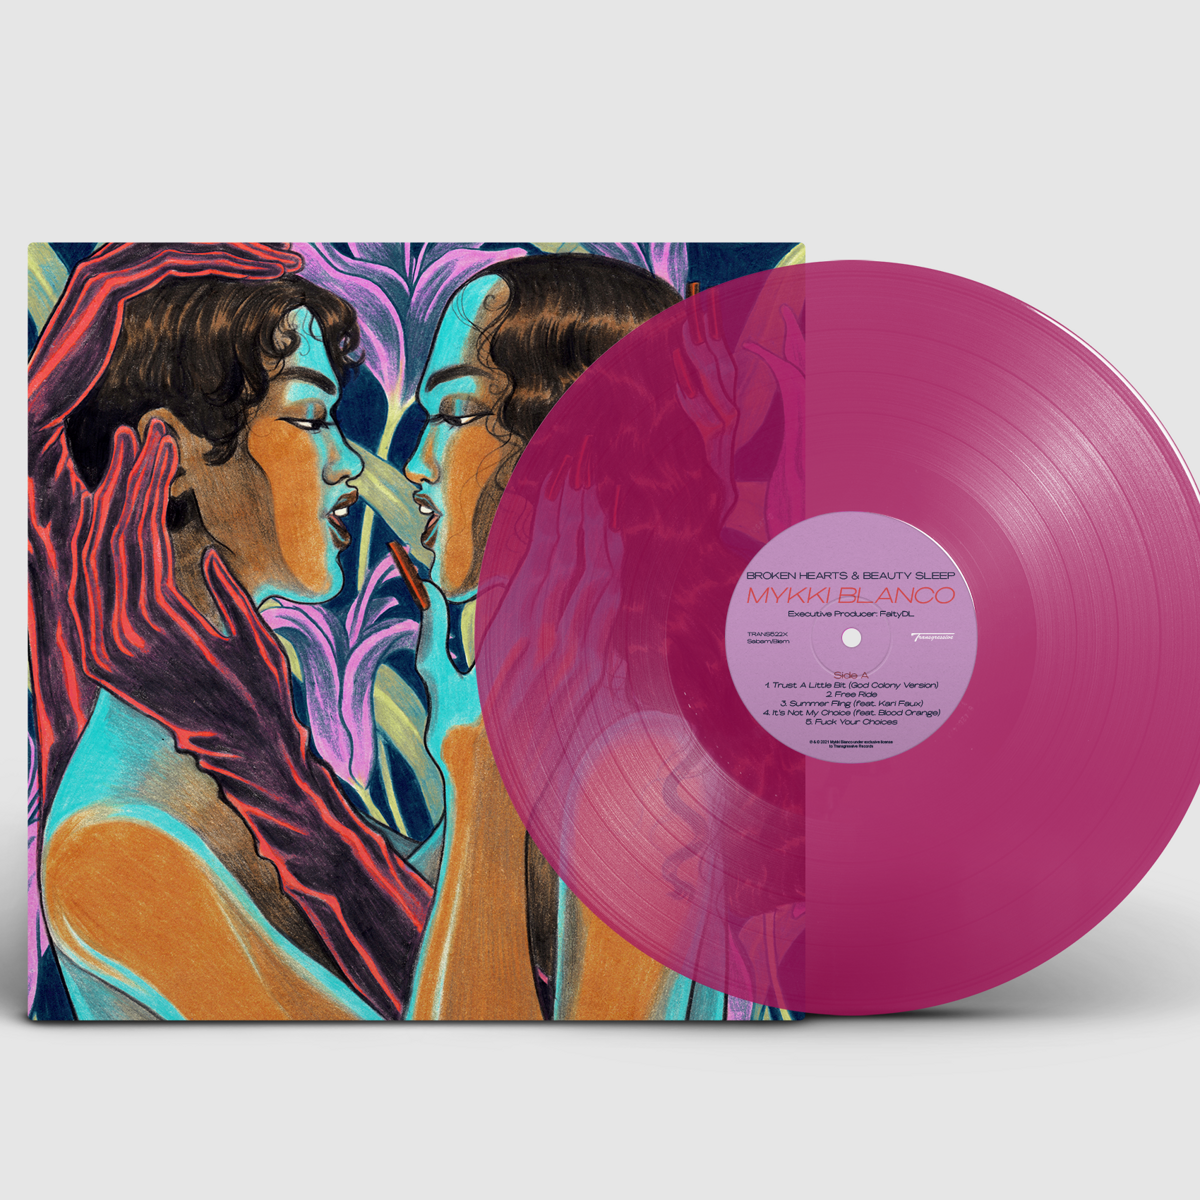 Mykki Blanco "Broken Hearts & Beauty Sleep" Colored LP